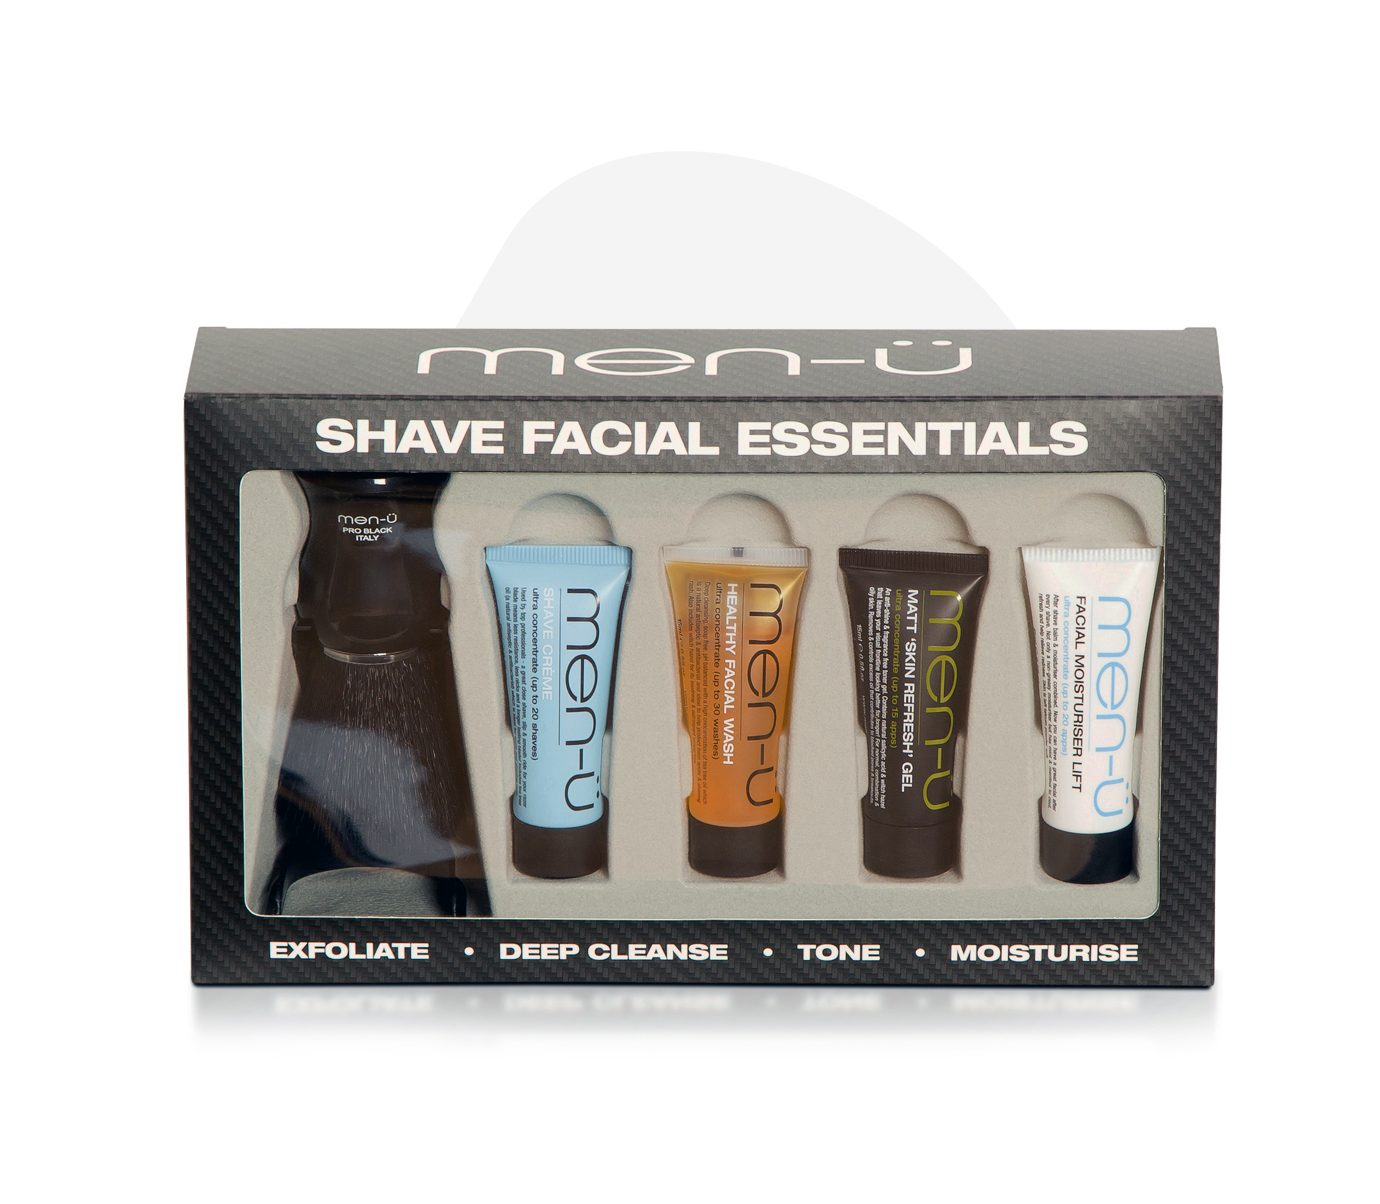 Shave Facial Essentials